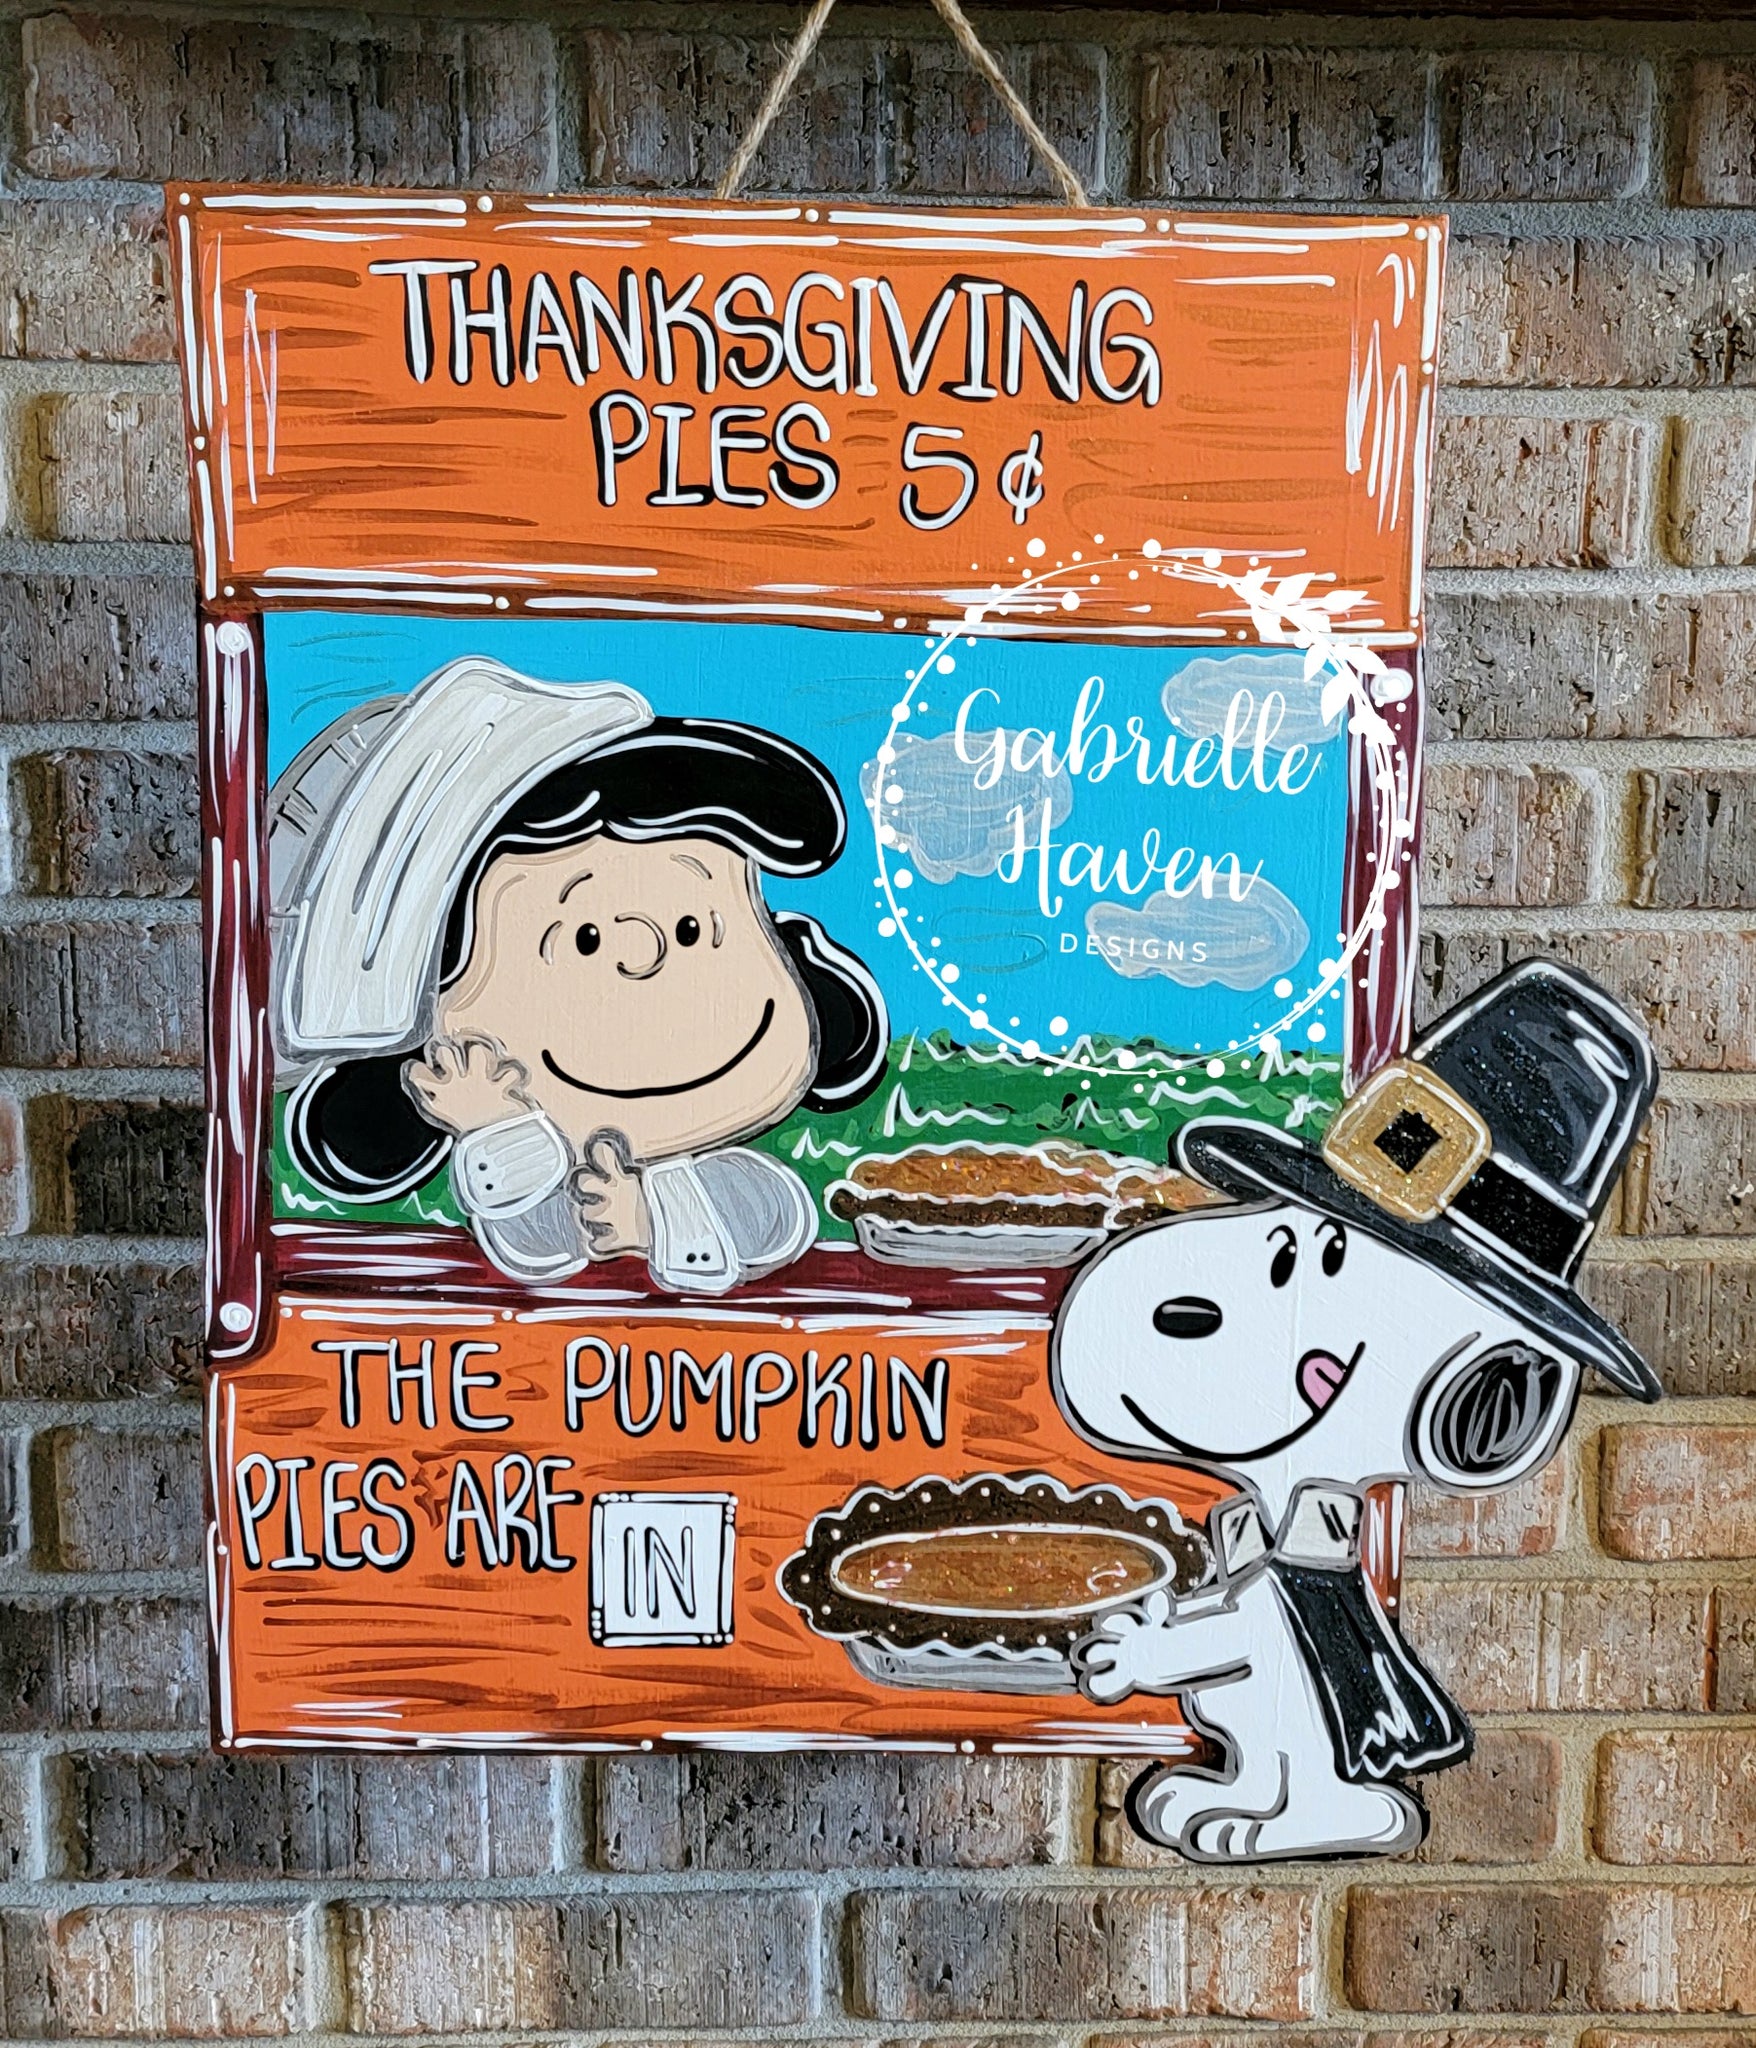 snoopy thanksgiving facebook cover